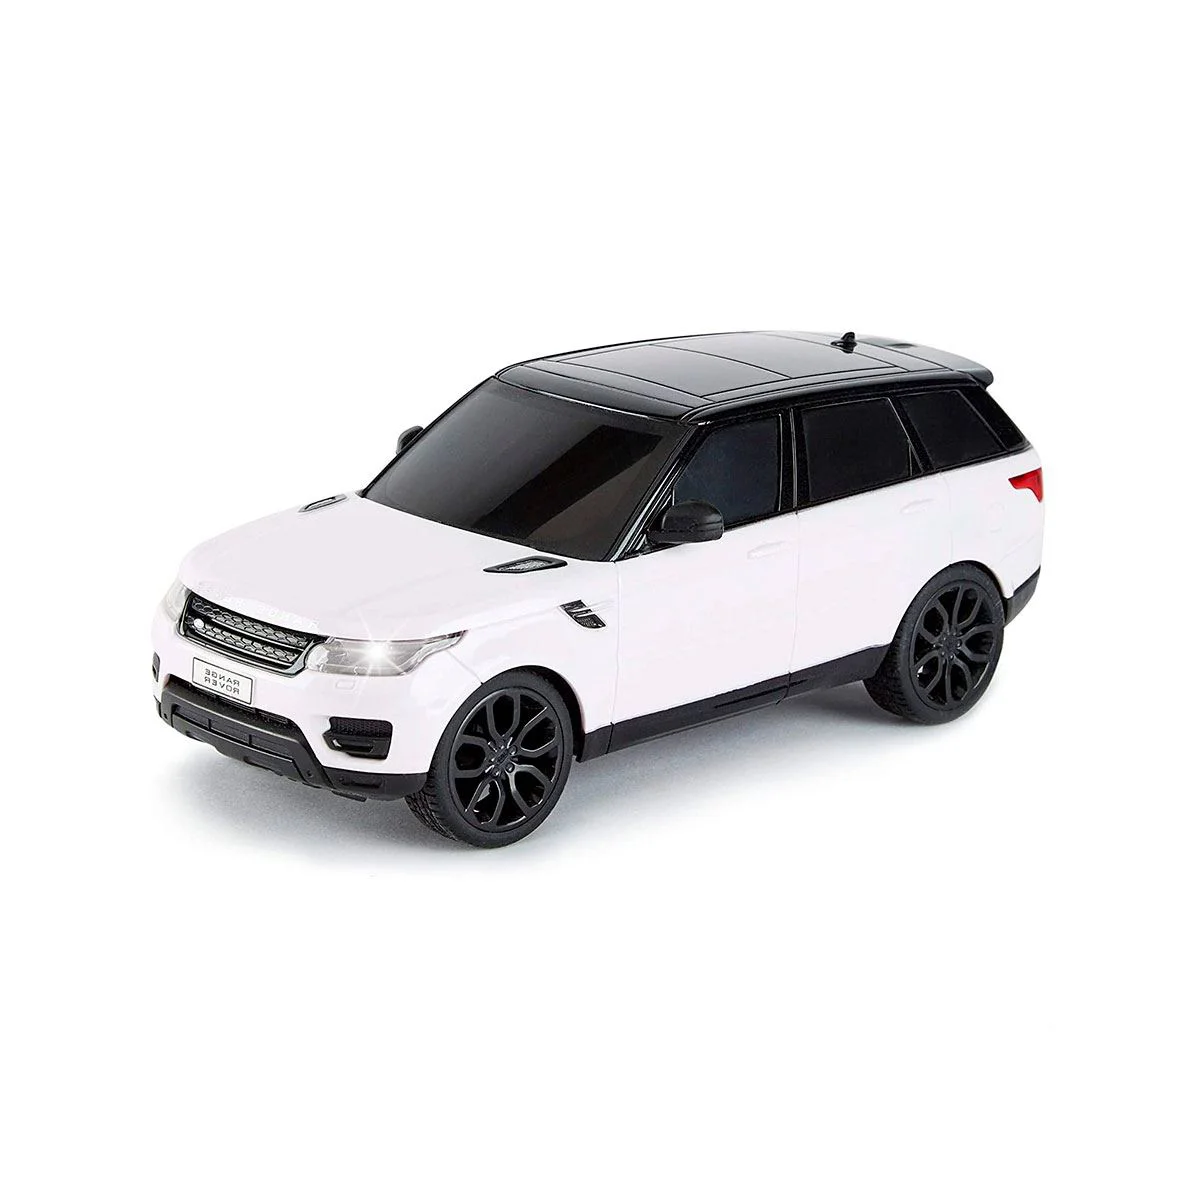 Masina cu telecomanda KS Drive - Land Rover Range Rover Sport (1:24, 2.4Ghz, alb)